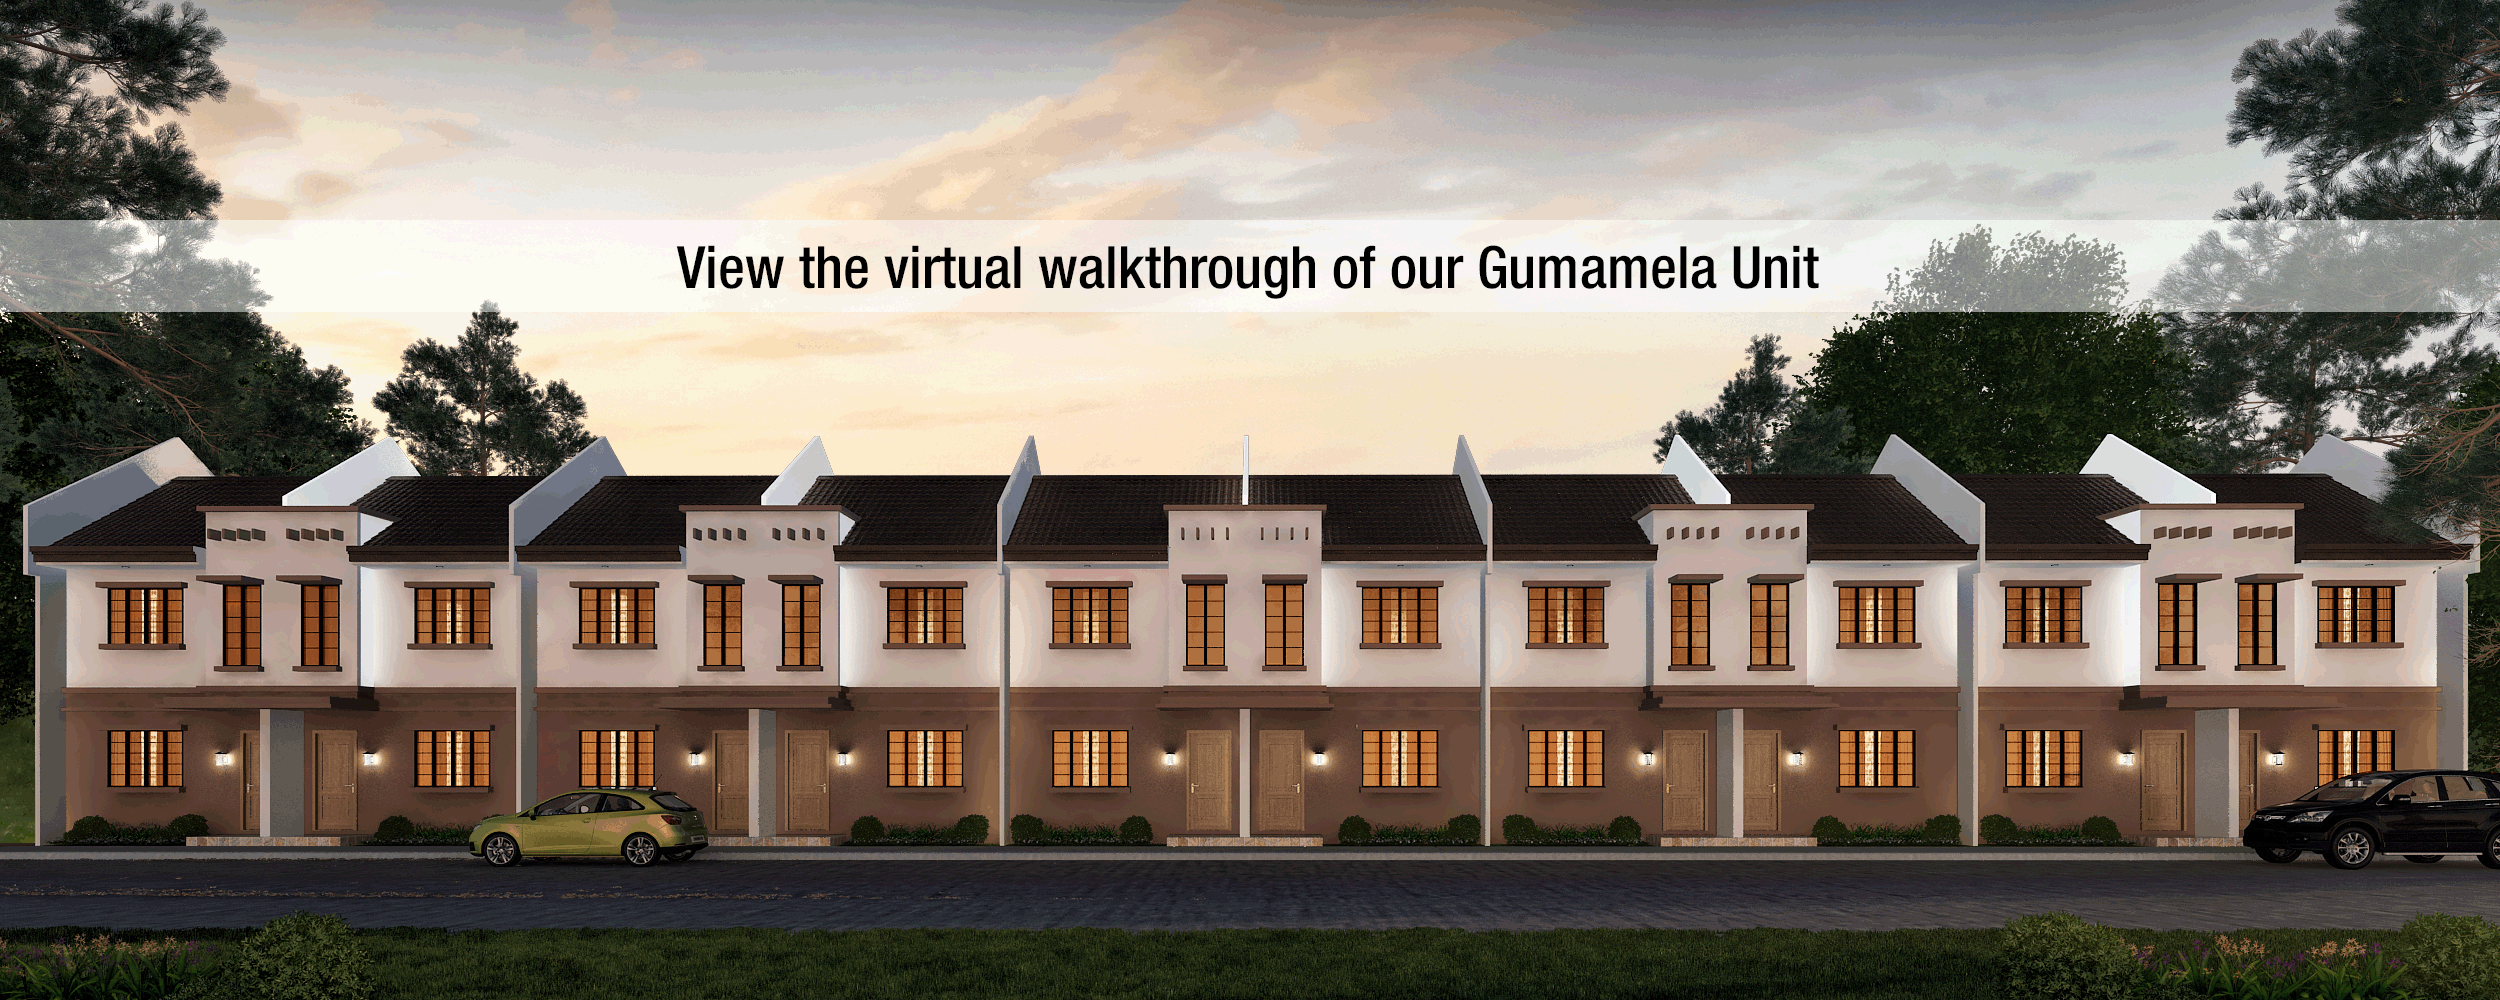 virtual-walkthrough-of-gumamela